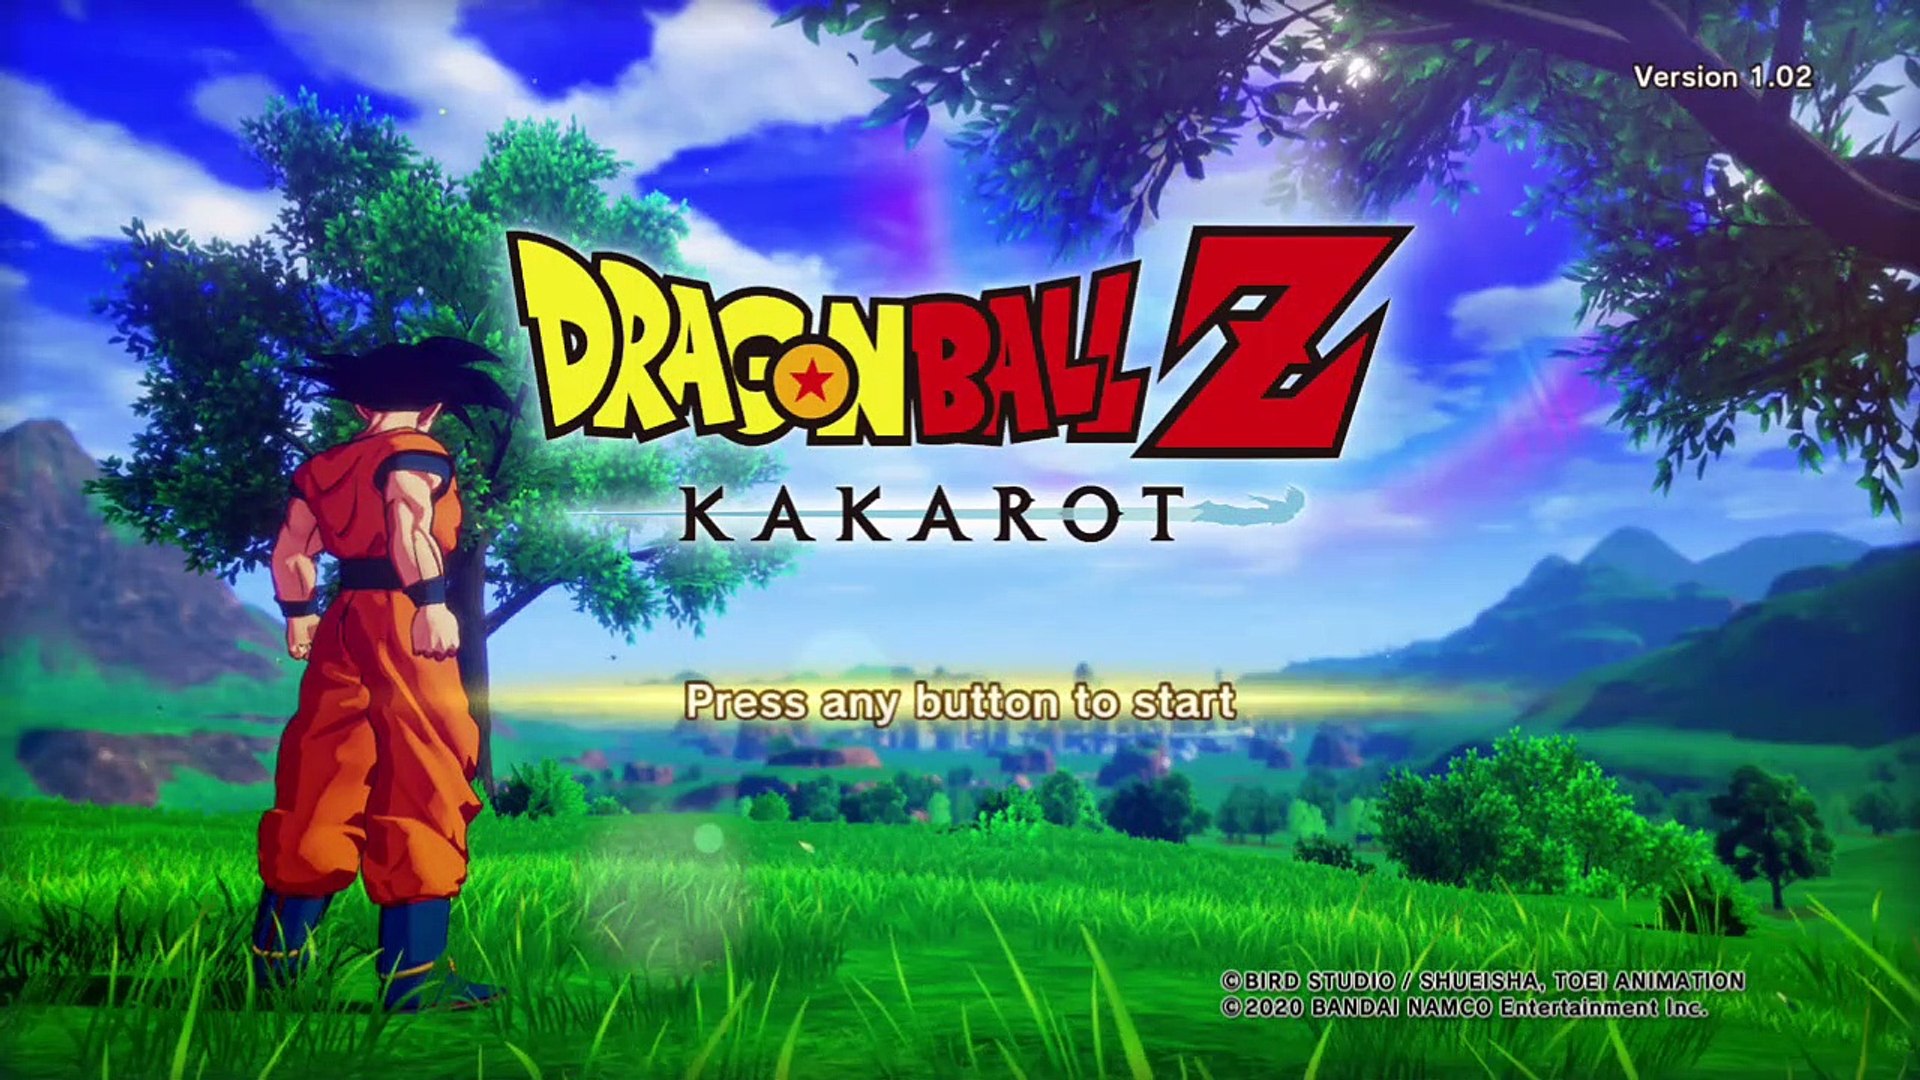 Android Saga Intro In Dragon Ball Z Kakarot! #dragonball #dragonballz